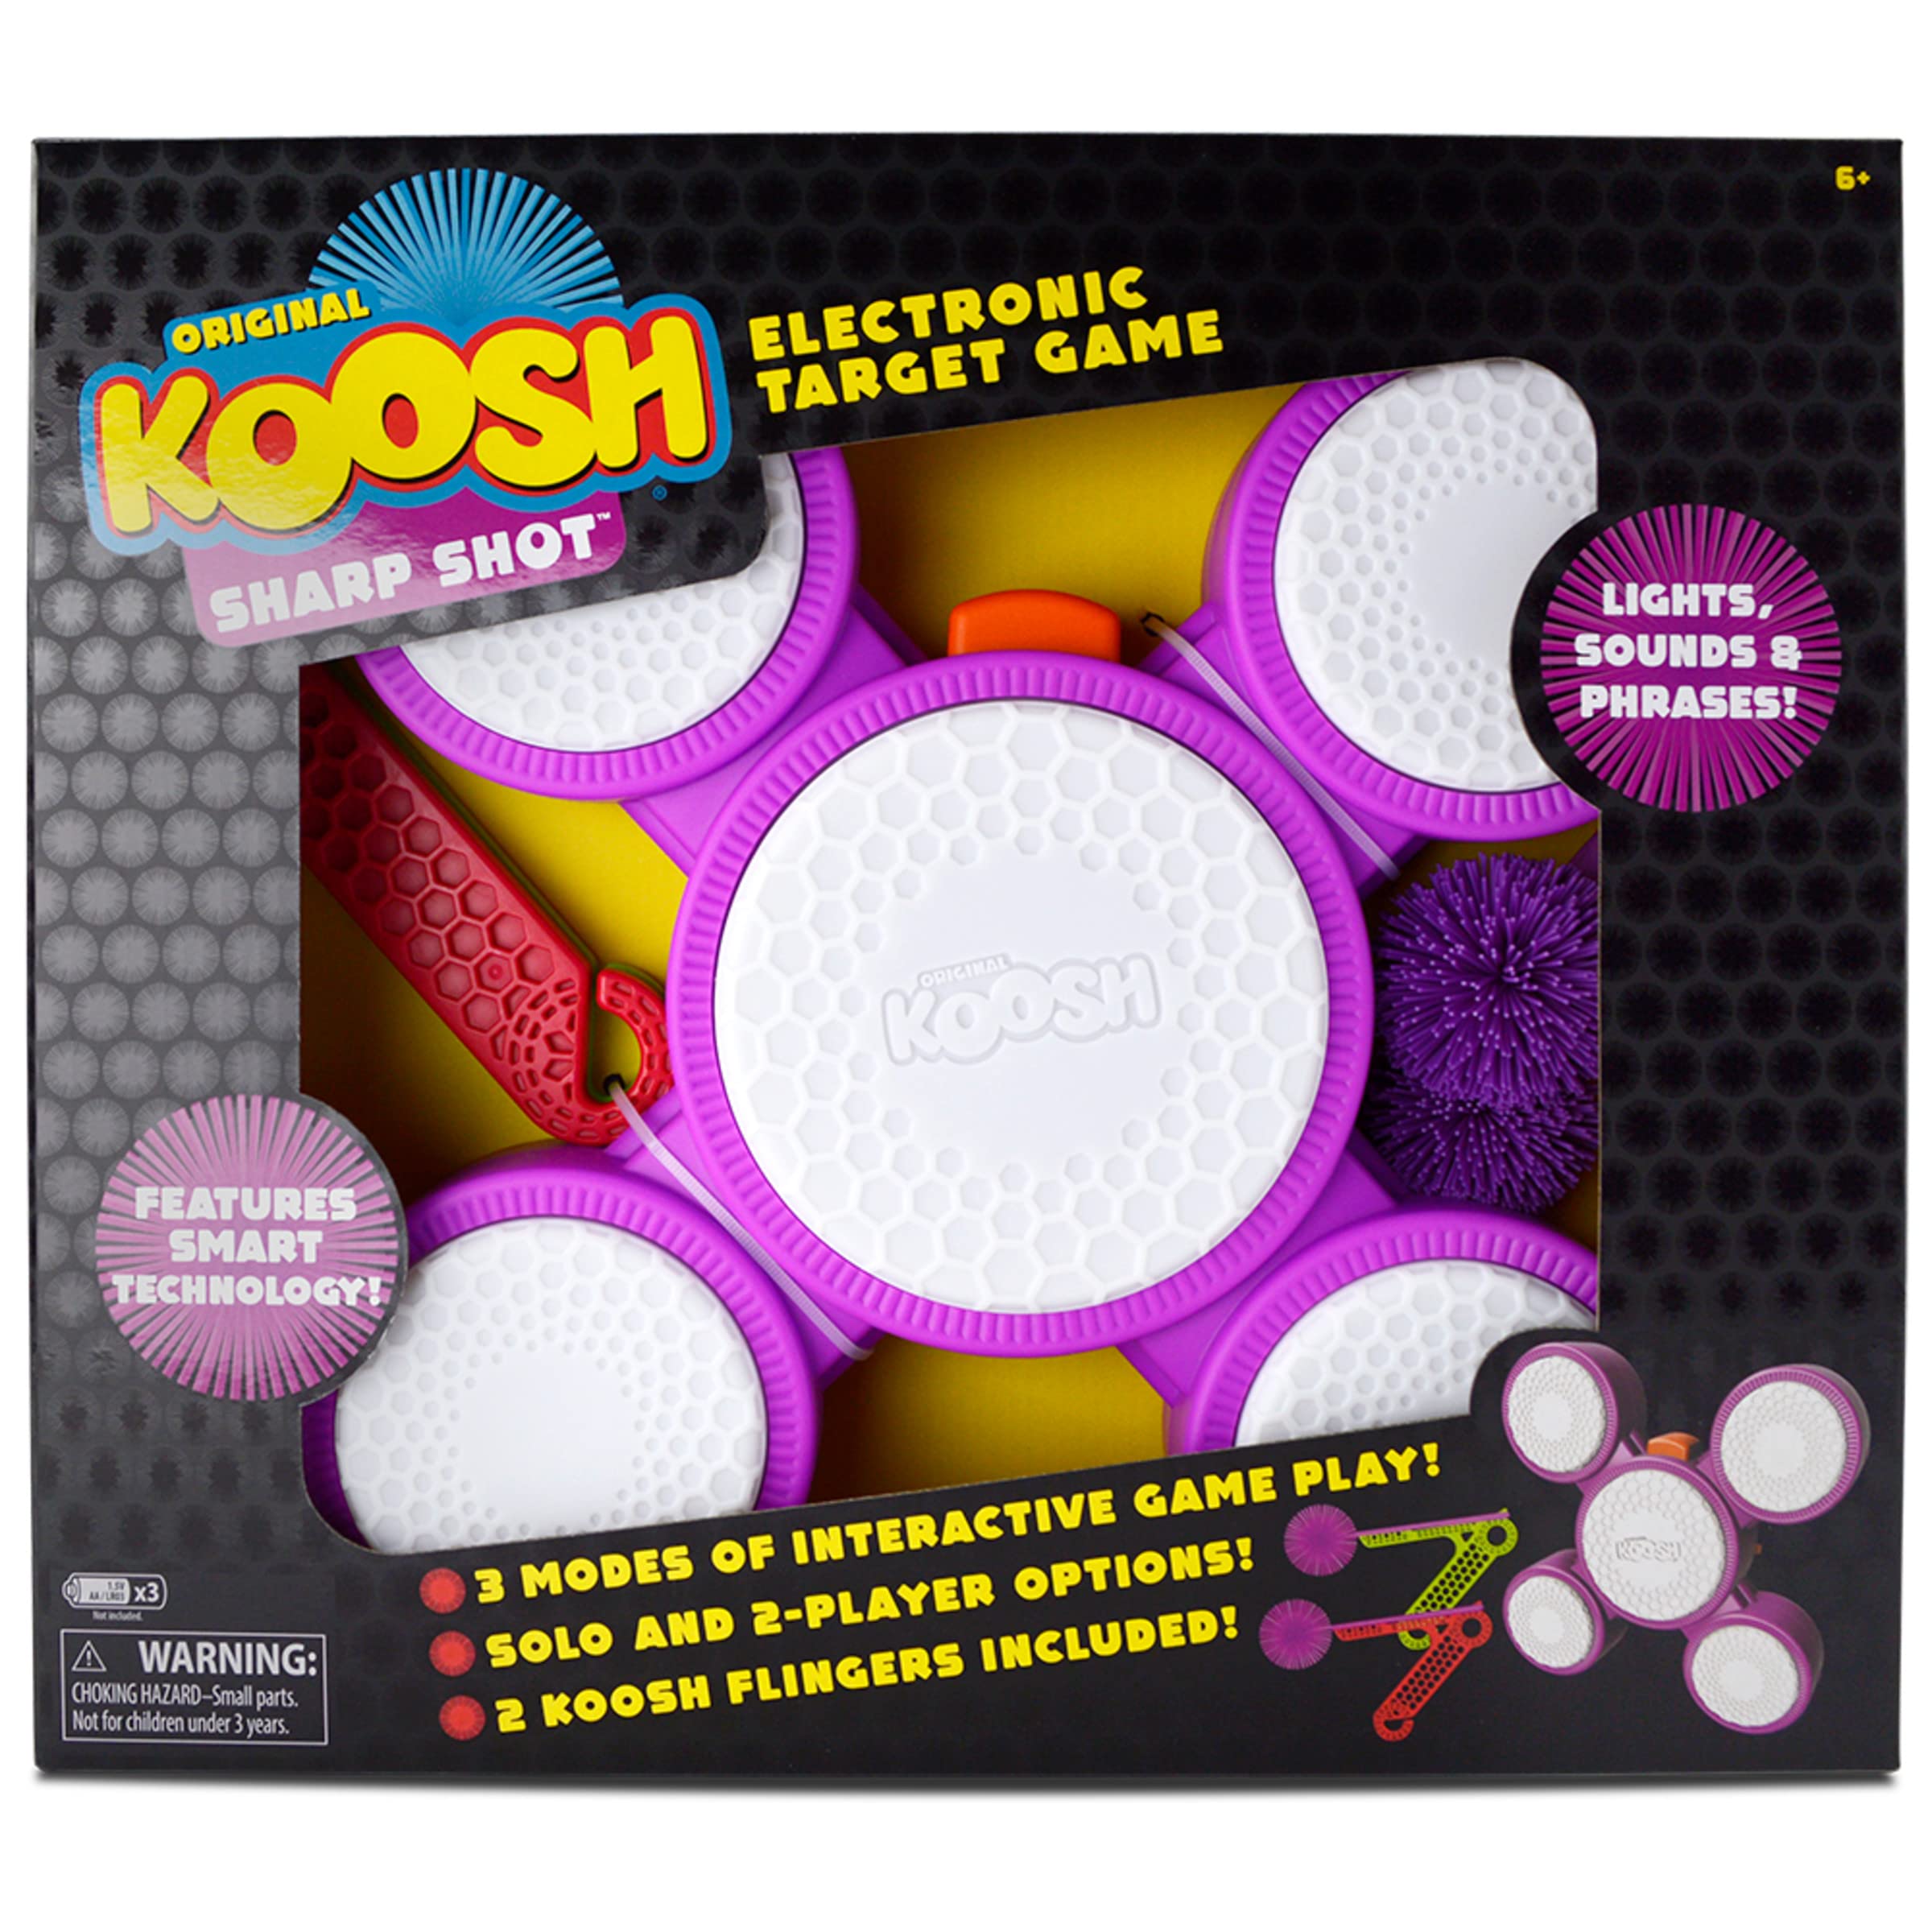 Koosh Sharp Shot Interactive Target Game (3 Games to Play) $9.20 + Free Shipping w/ Prime or $25+